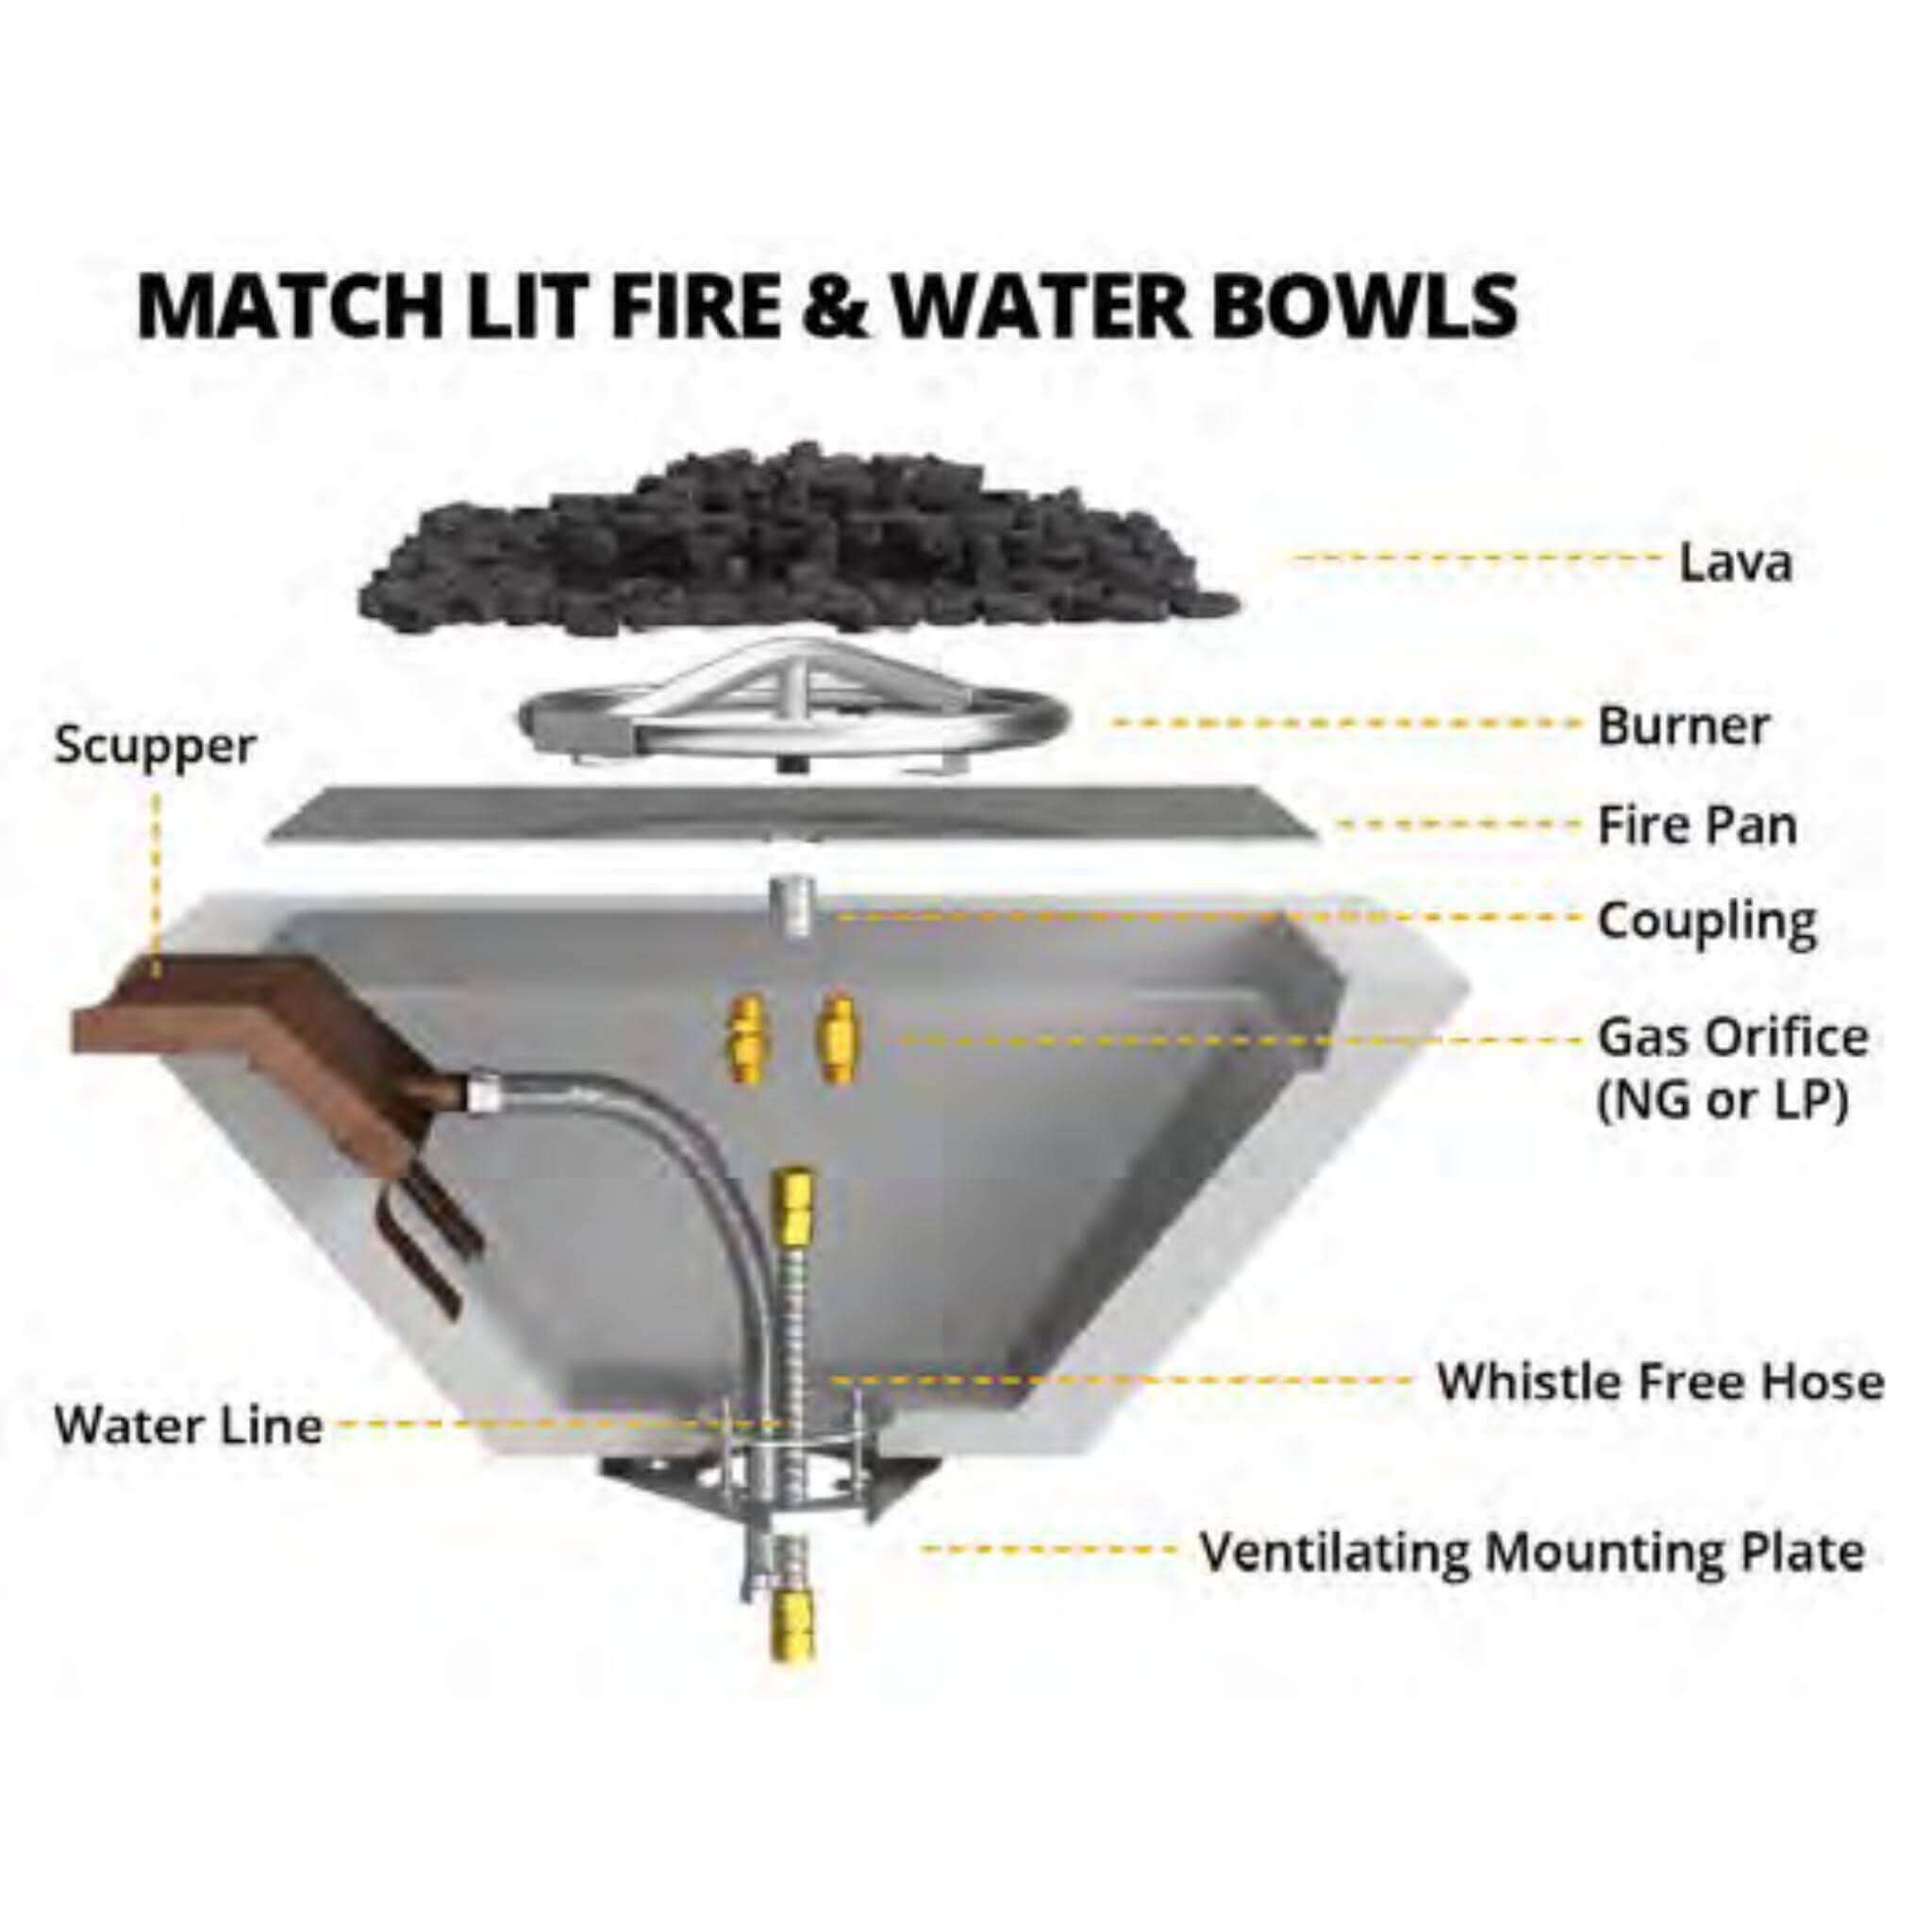 "Sedona" Wood Grain Concrete Fire & Water Bowl - The Outdoor Plus